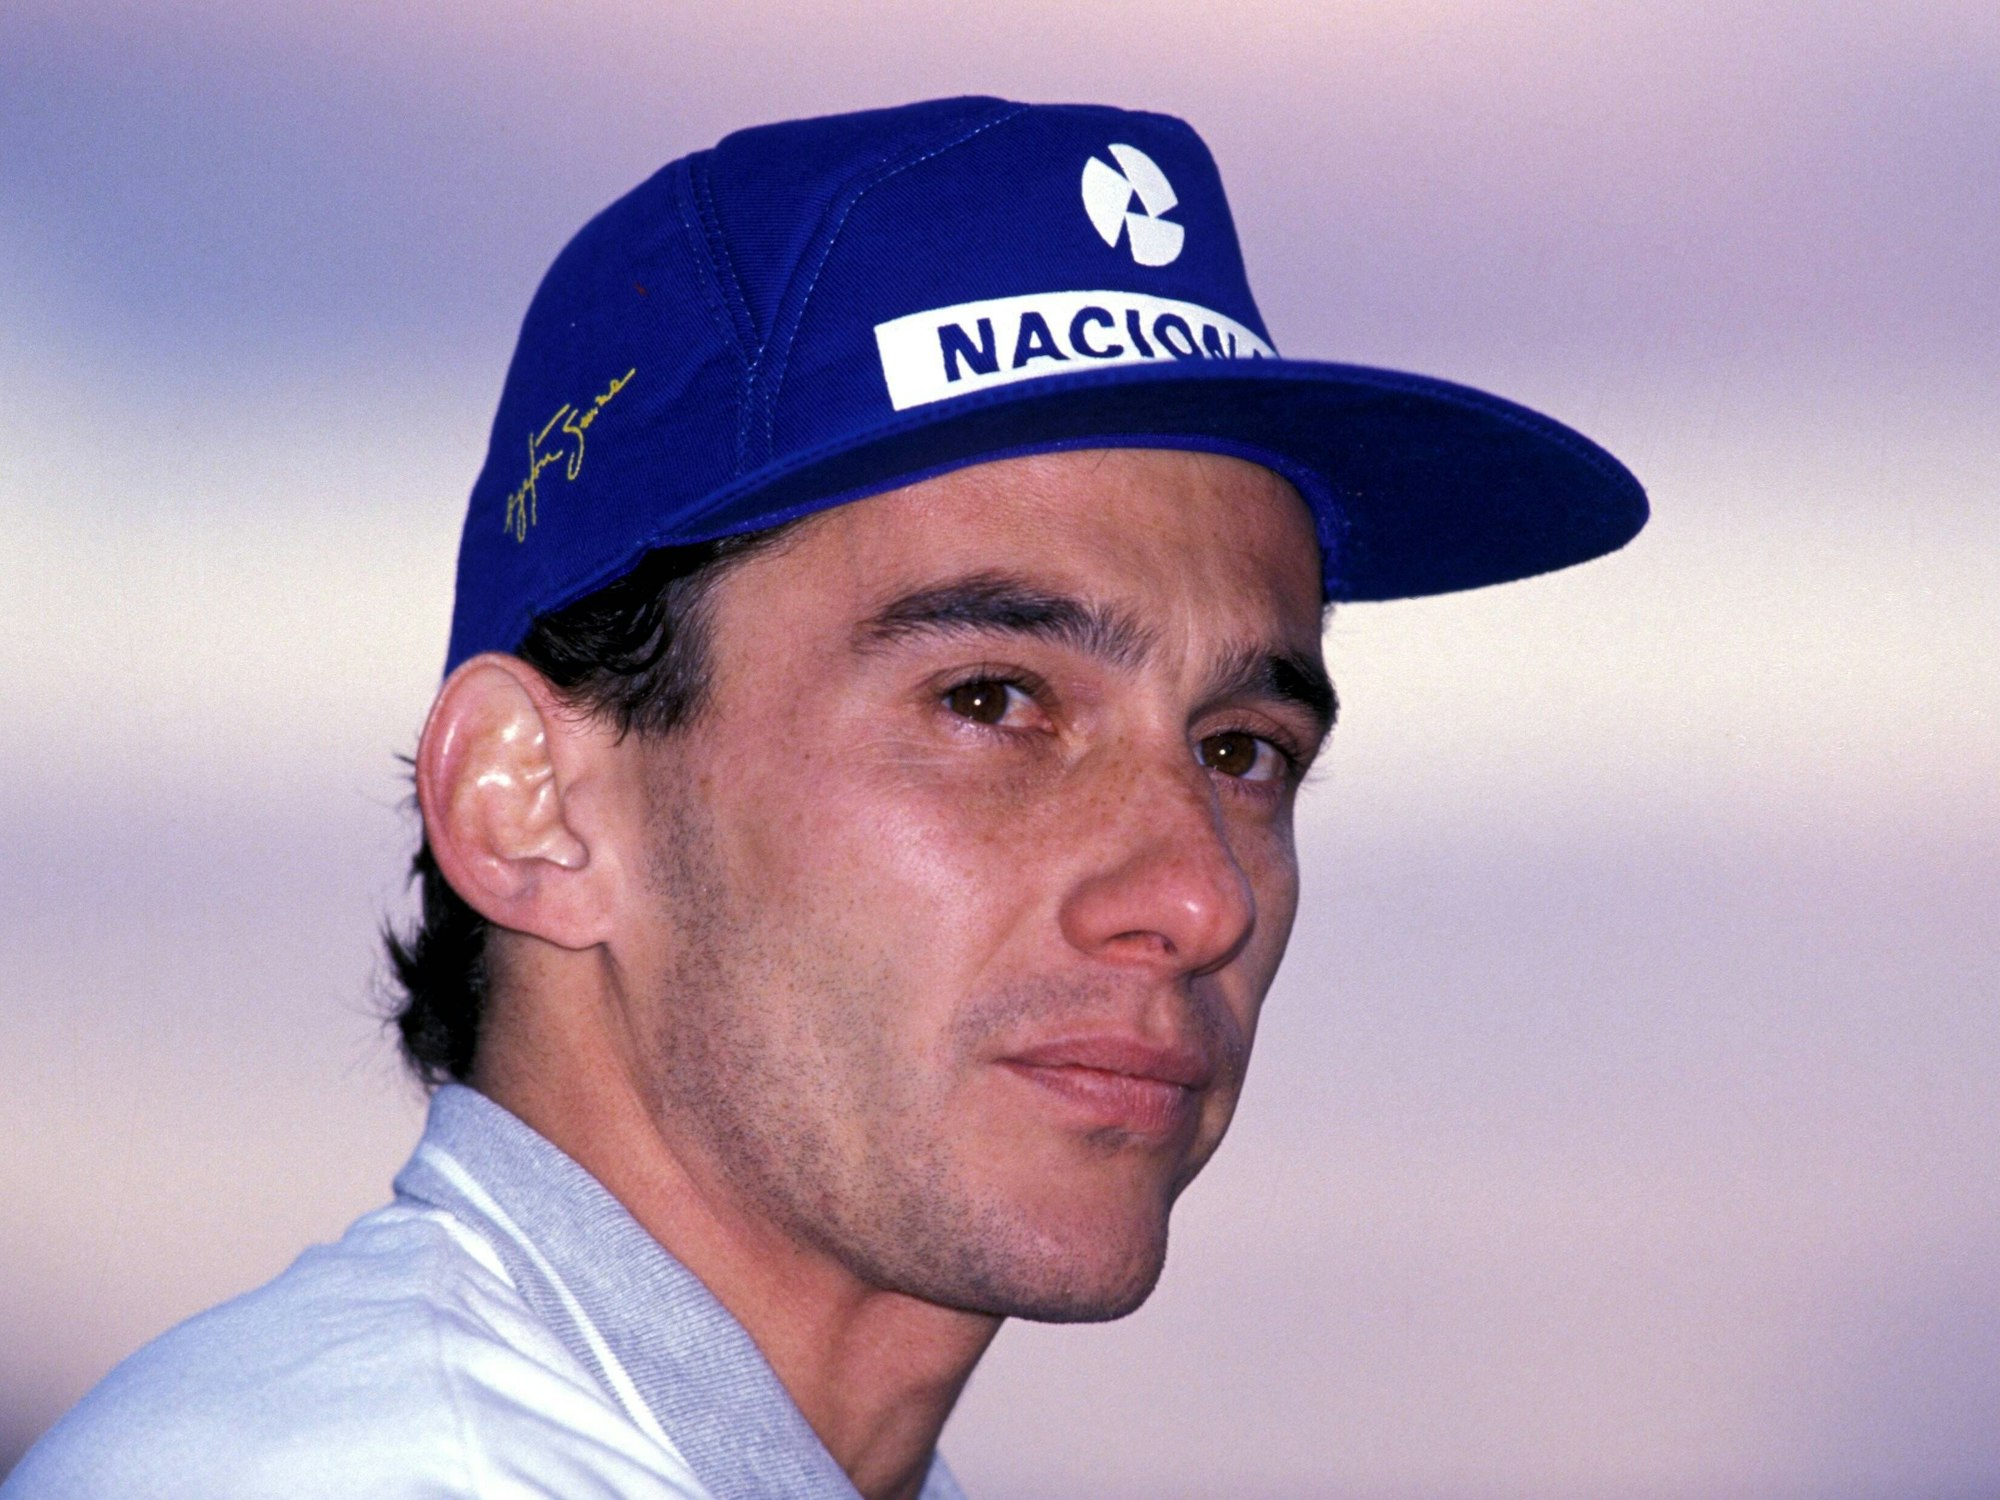 Ayrton Senna in Großaufnahme mit Kappe.